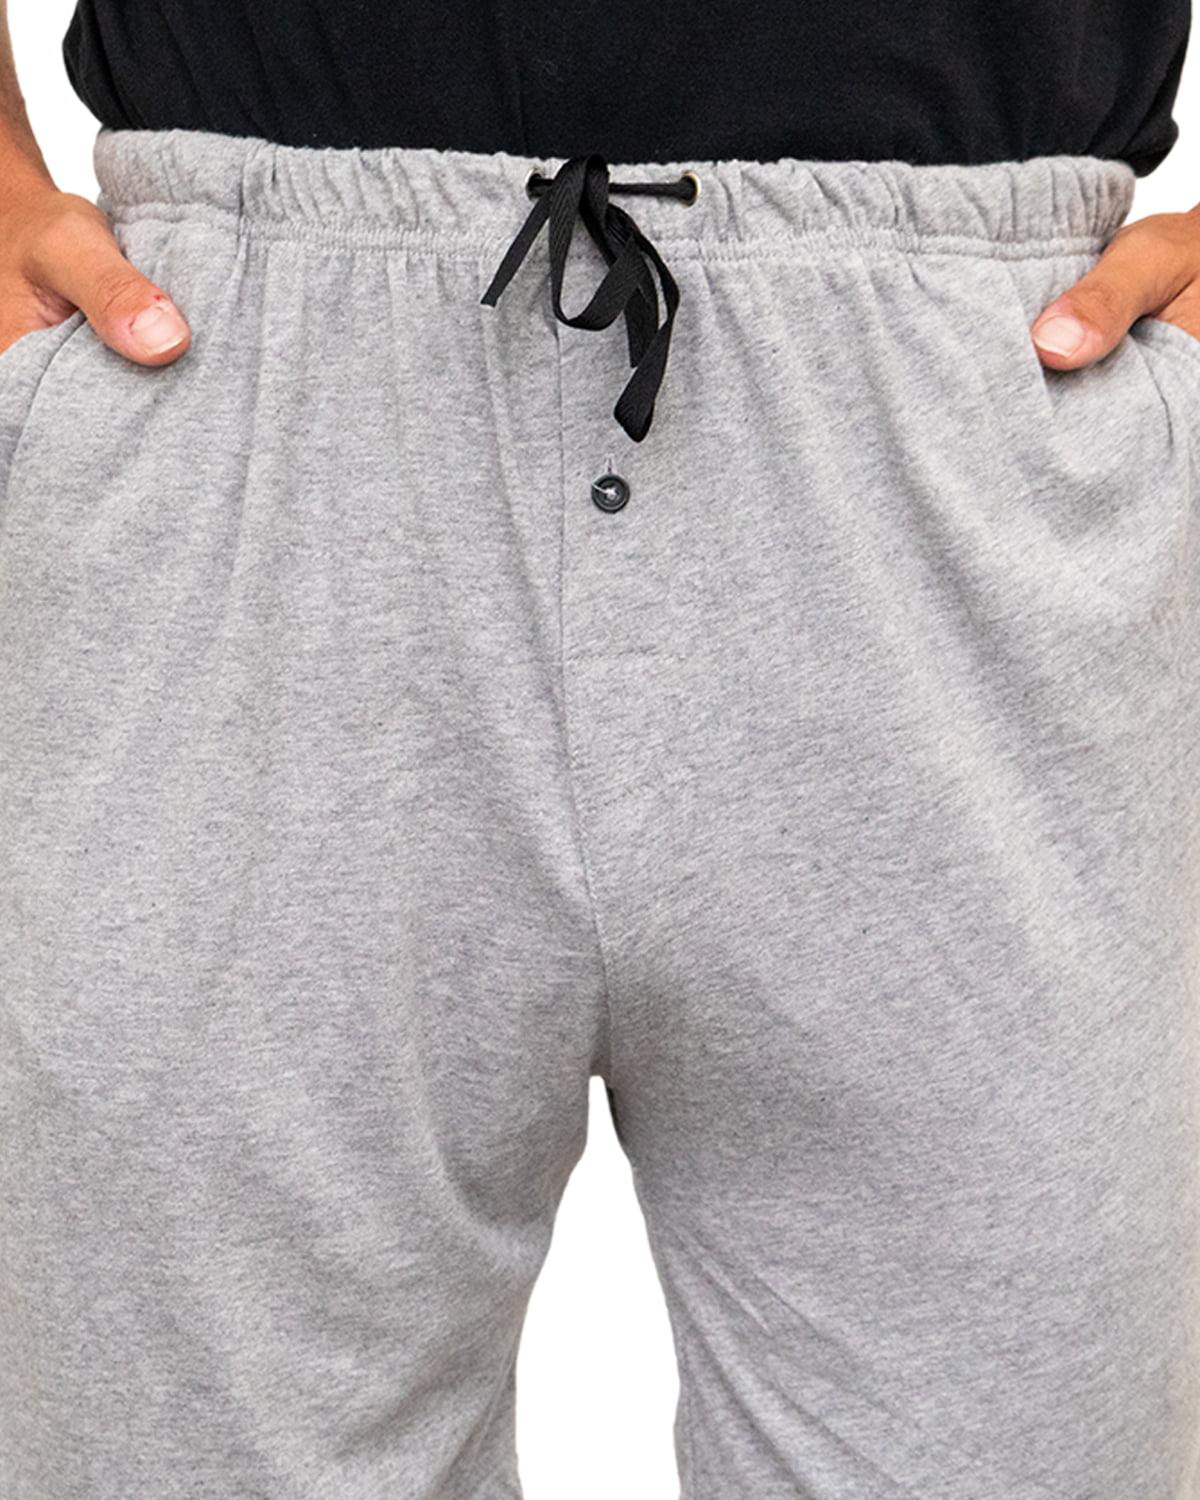 Casual Pajama Lounge & Sleepwear TruFit Men’s Cotton Lightweight Shorts 